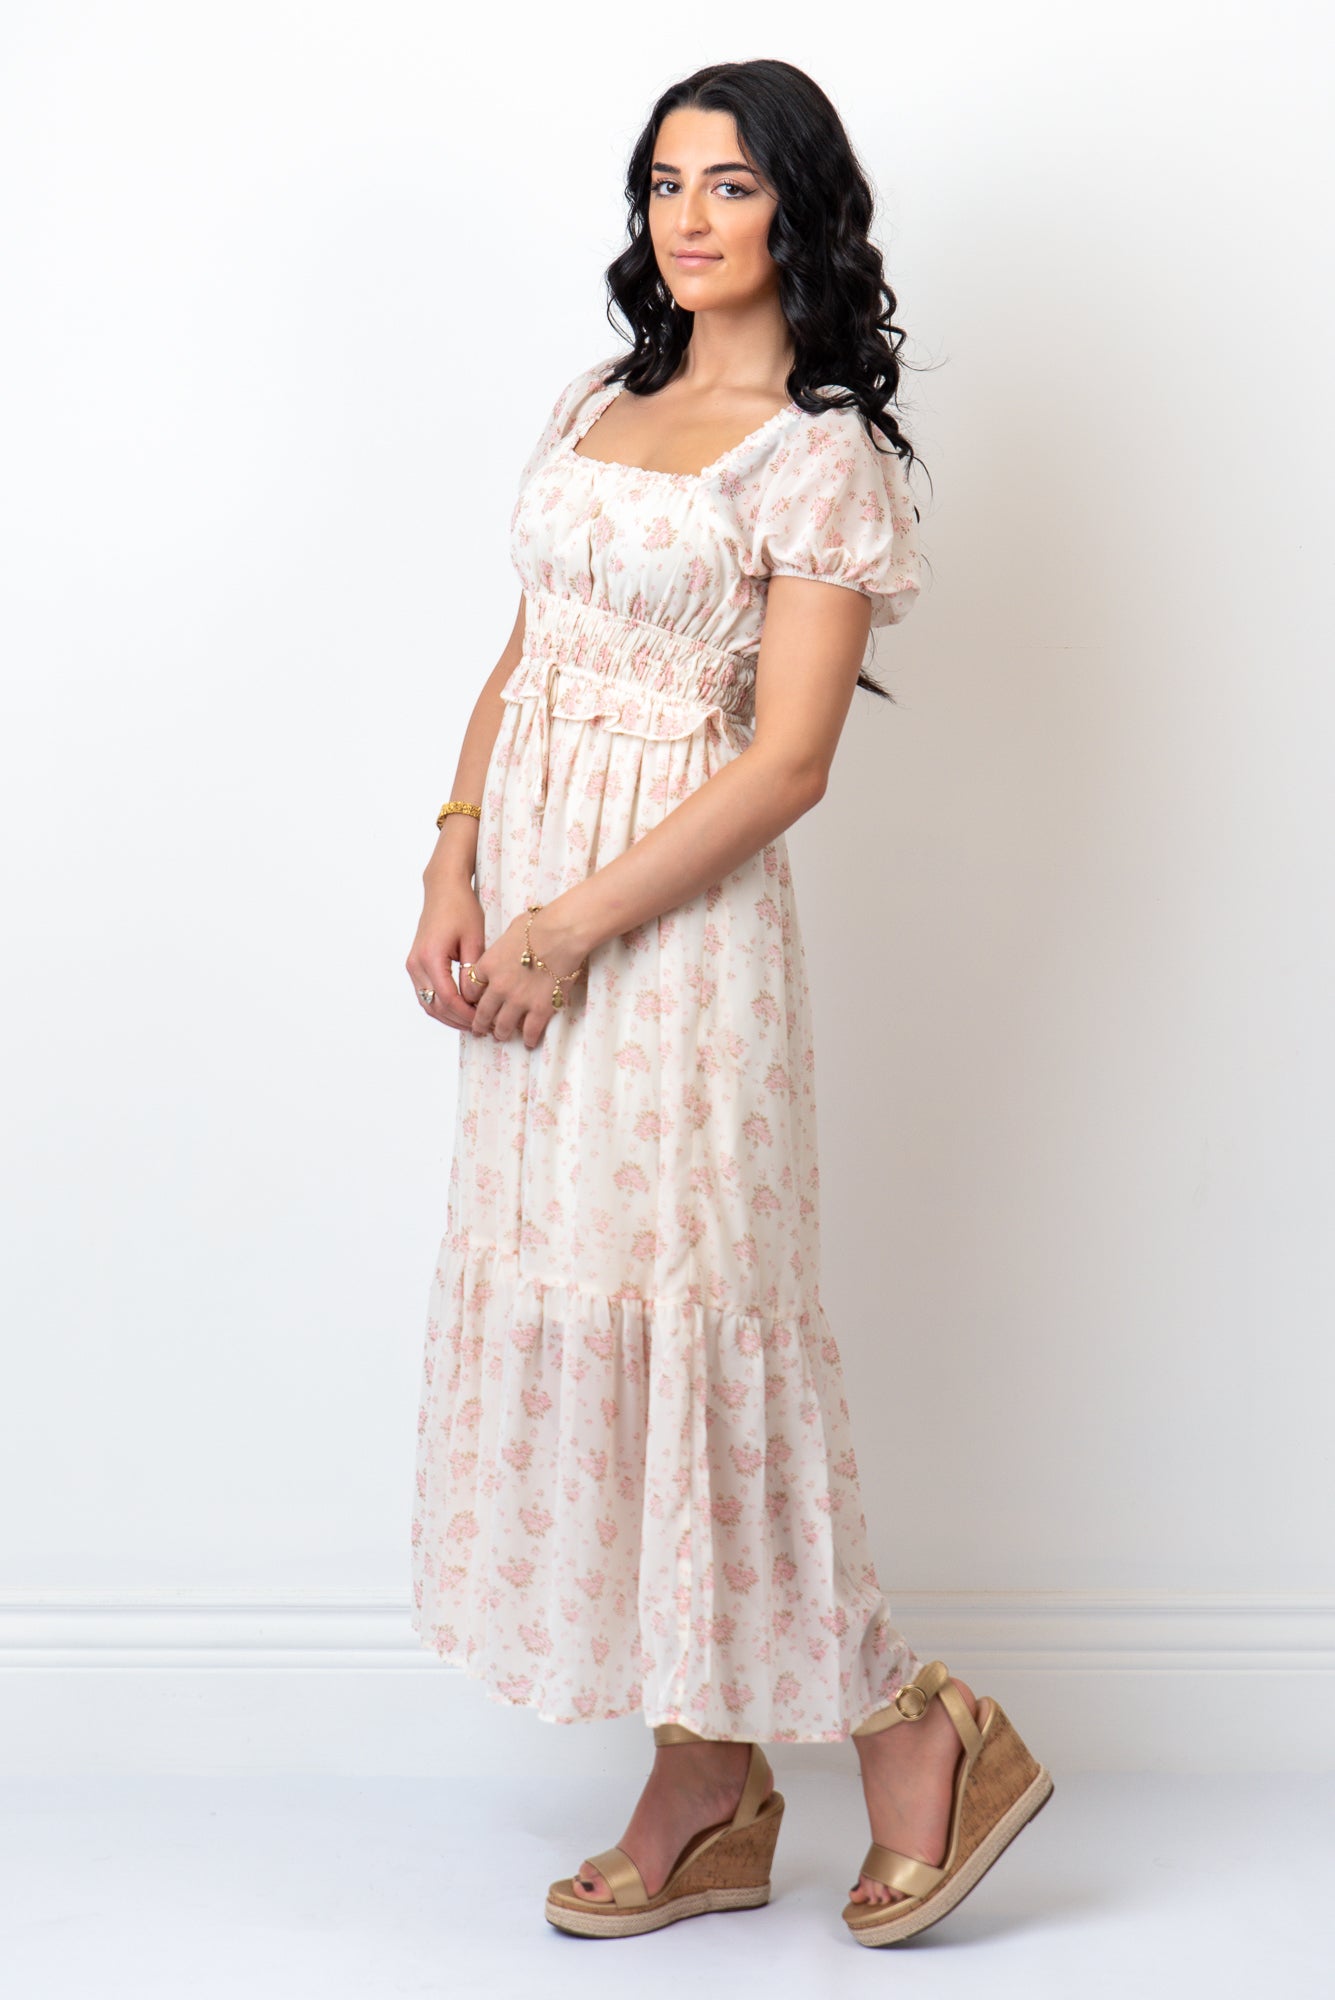 The Bingley Dress in English Rose - Final Sale